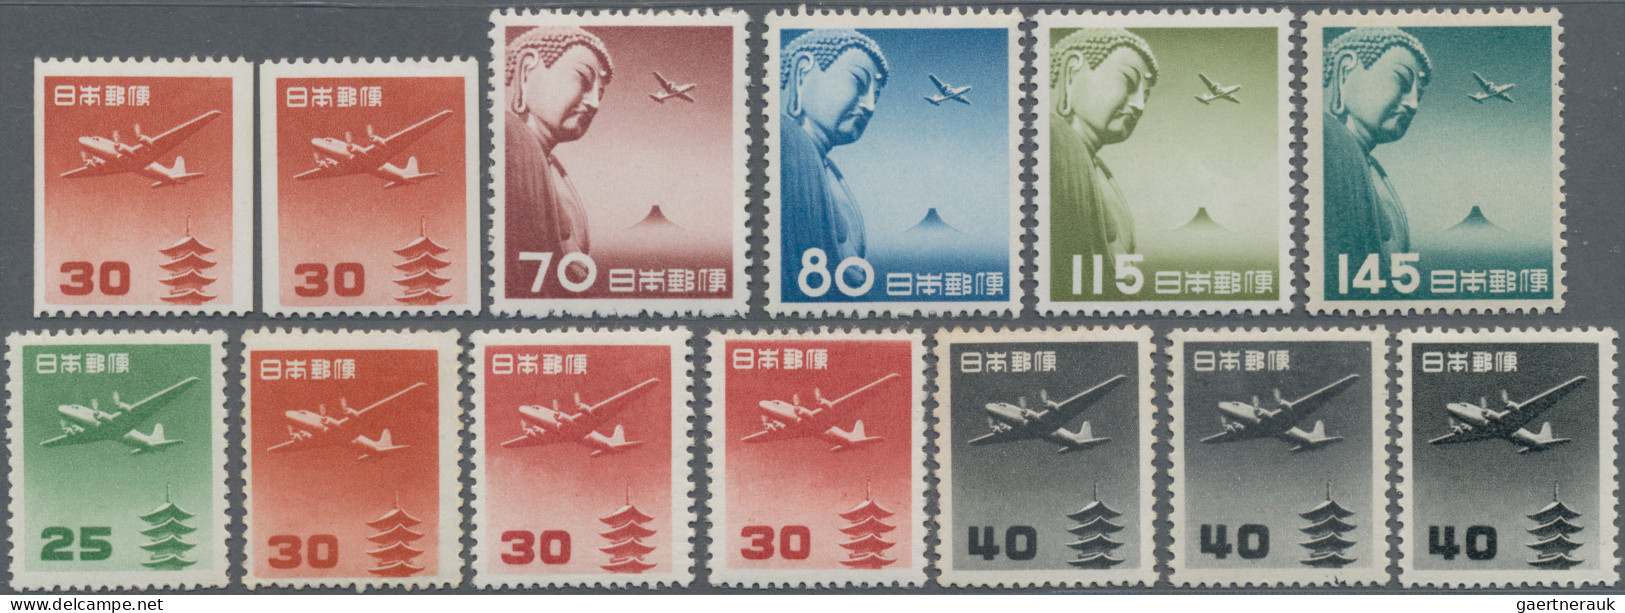 Japan: 1929/1961, stock of airmail stamps, Lake Ashi to Great Buddha, majority u